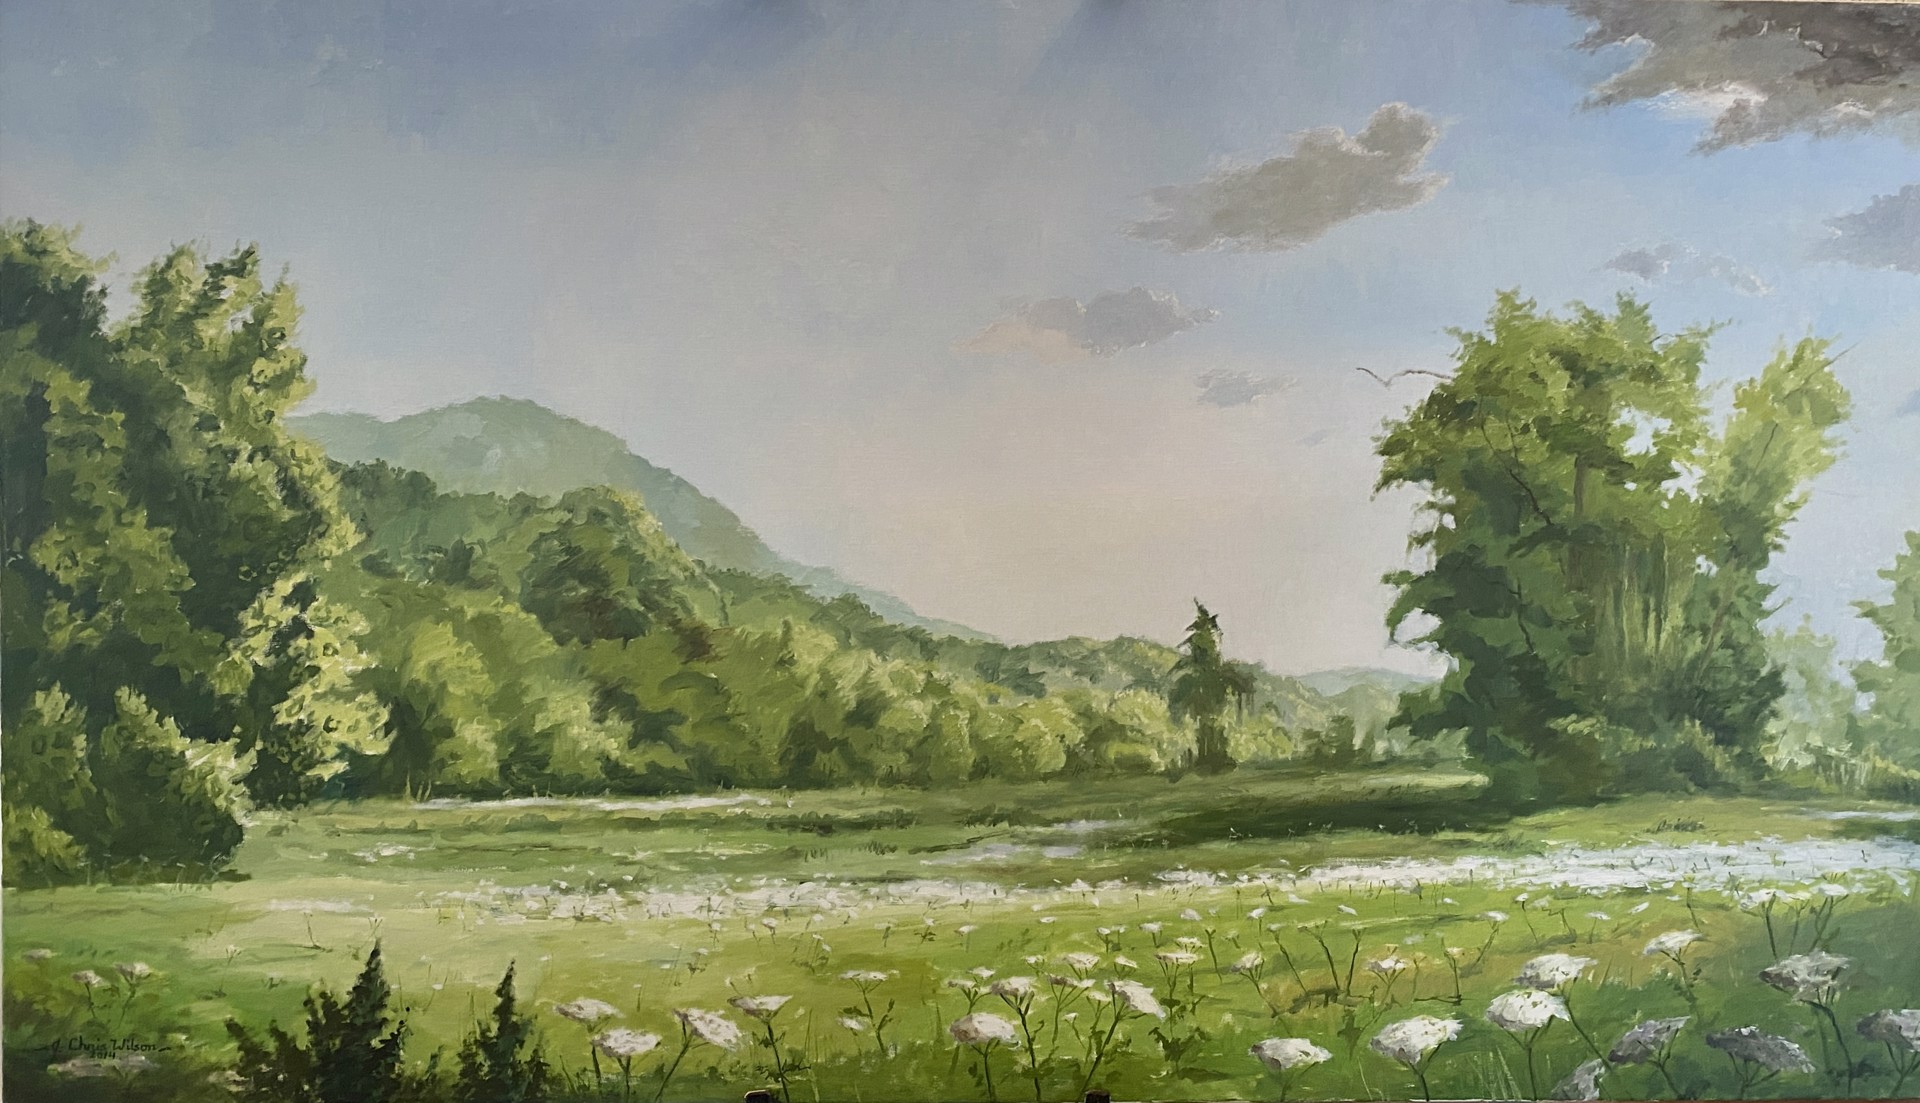 Summer Meadow on Cane Creek by J. Chris Wilson